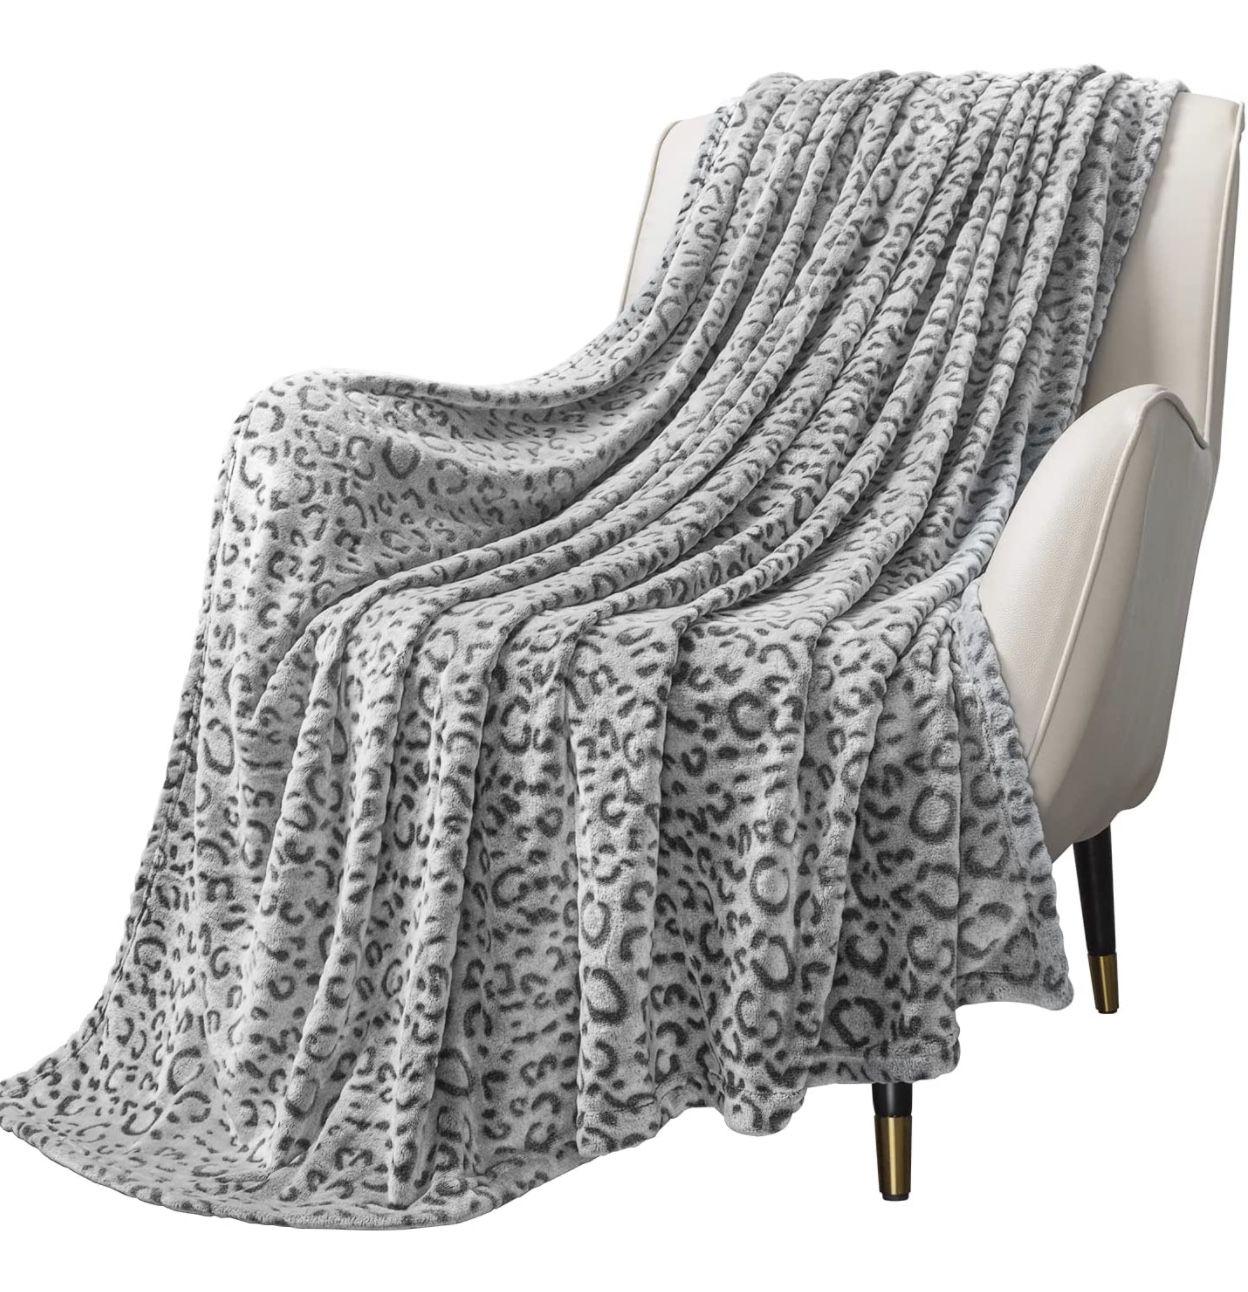 Flannel Fleece Throw Blanket for Couch Fuzzy 3D Cheetah Blanket Lightweight Warm Cozy Comfy Super Soft Leopard Blanket for Bed Sofa 260GSM (Black Leop